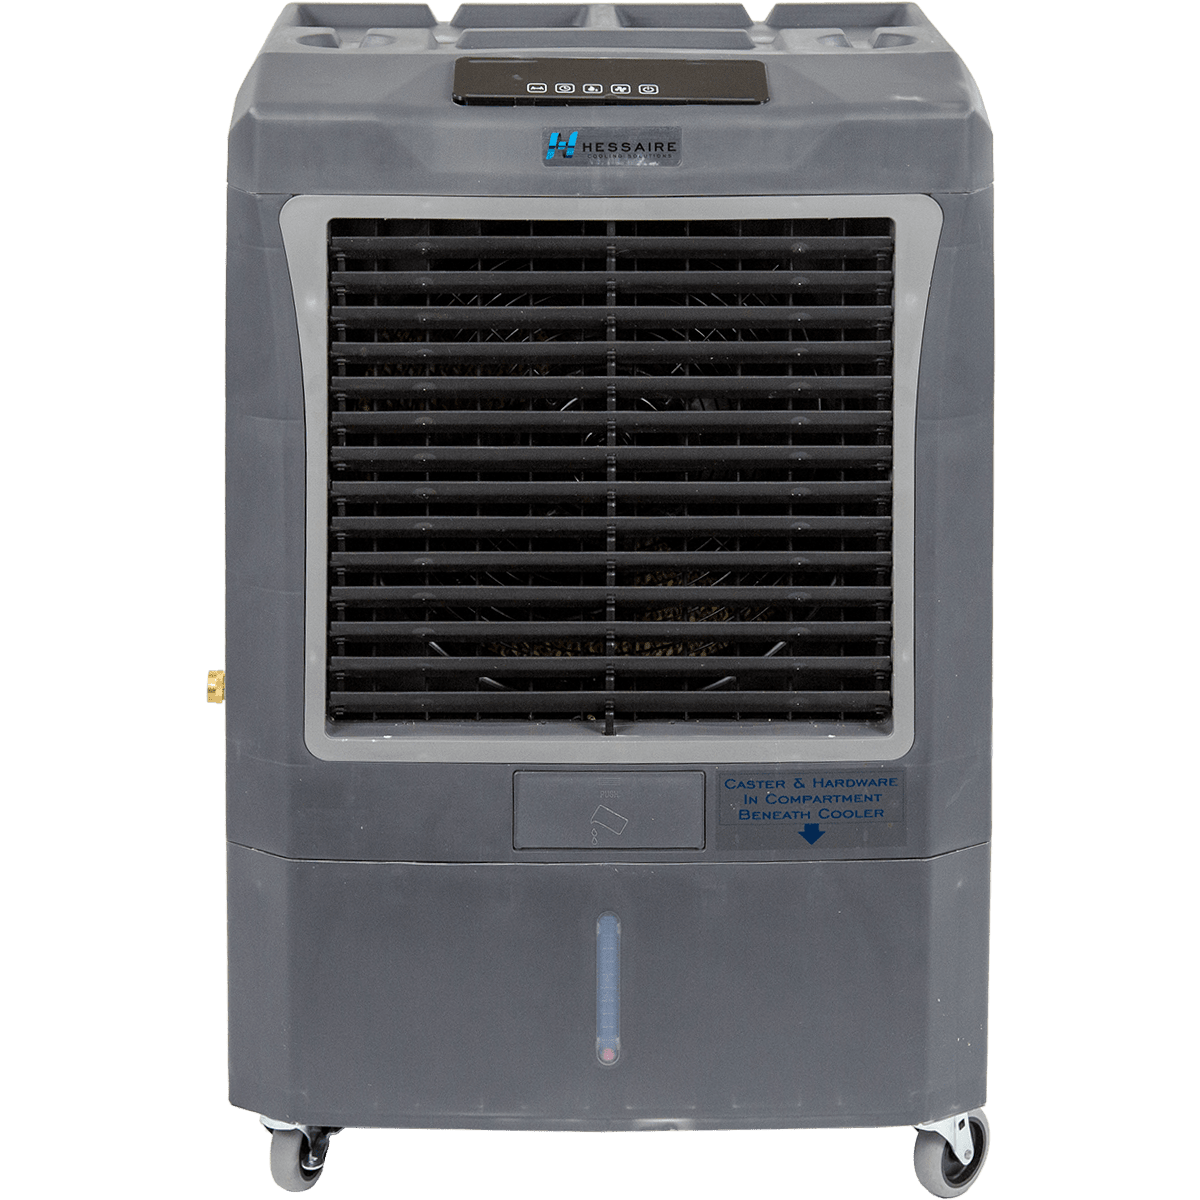 Hessaire MC37A 3,100 CFM Evaporative Cooler w/ Automatic Controls
 - Primary View